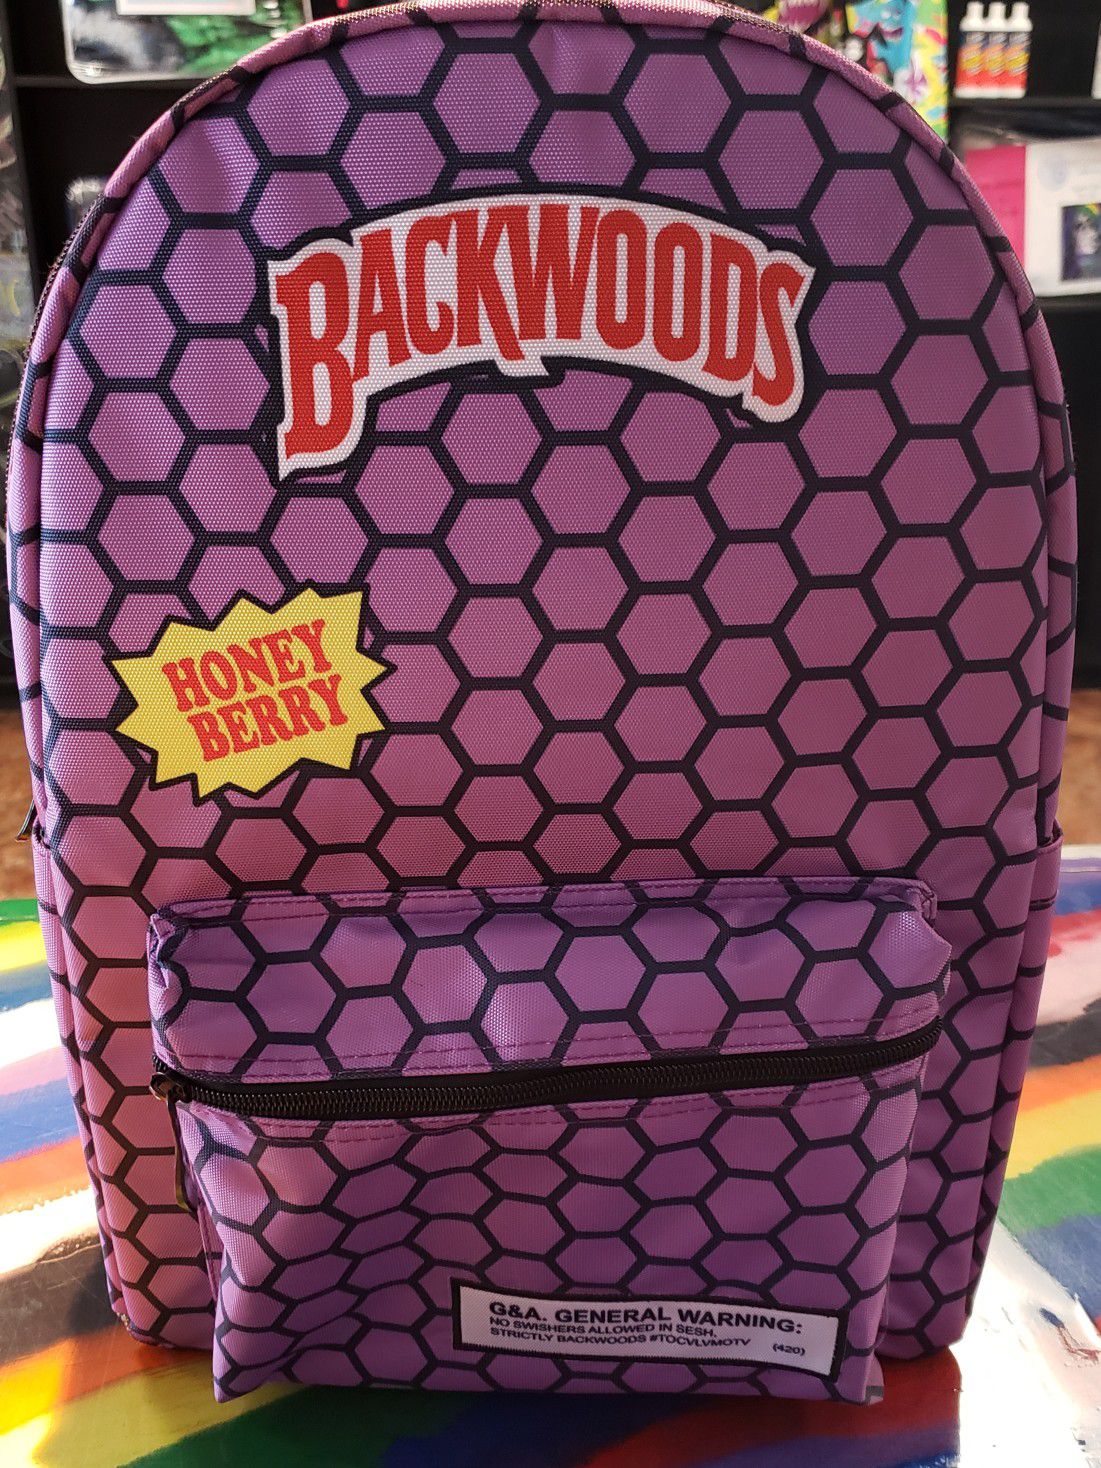 Backwoods laptop backpacks! (High quality)